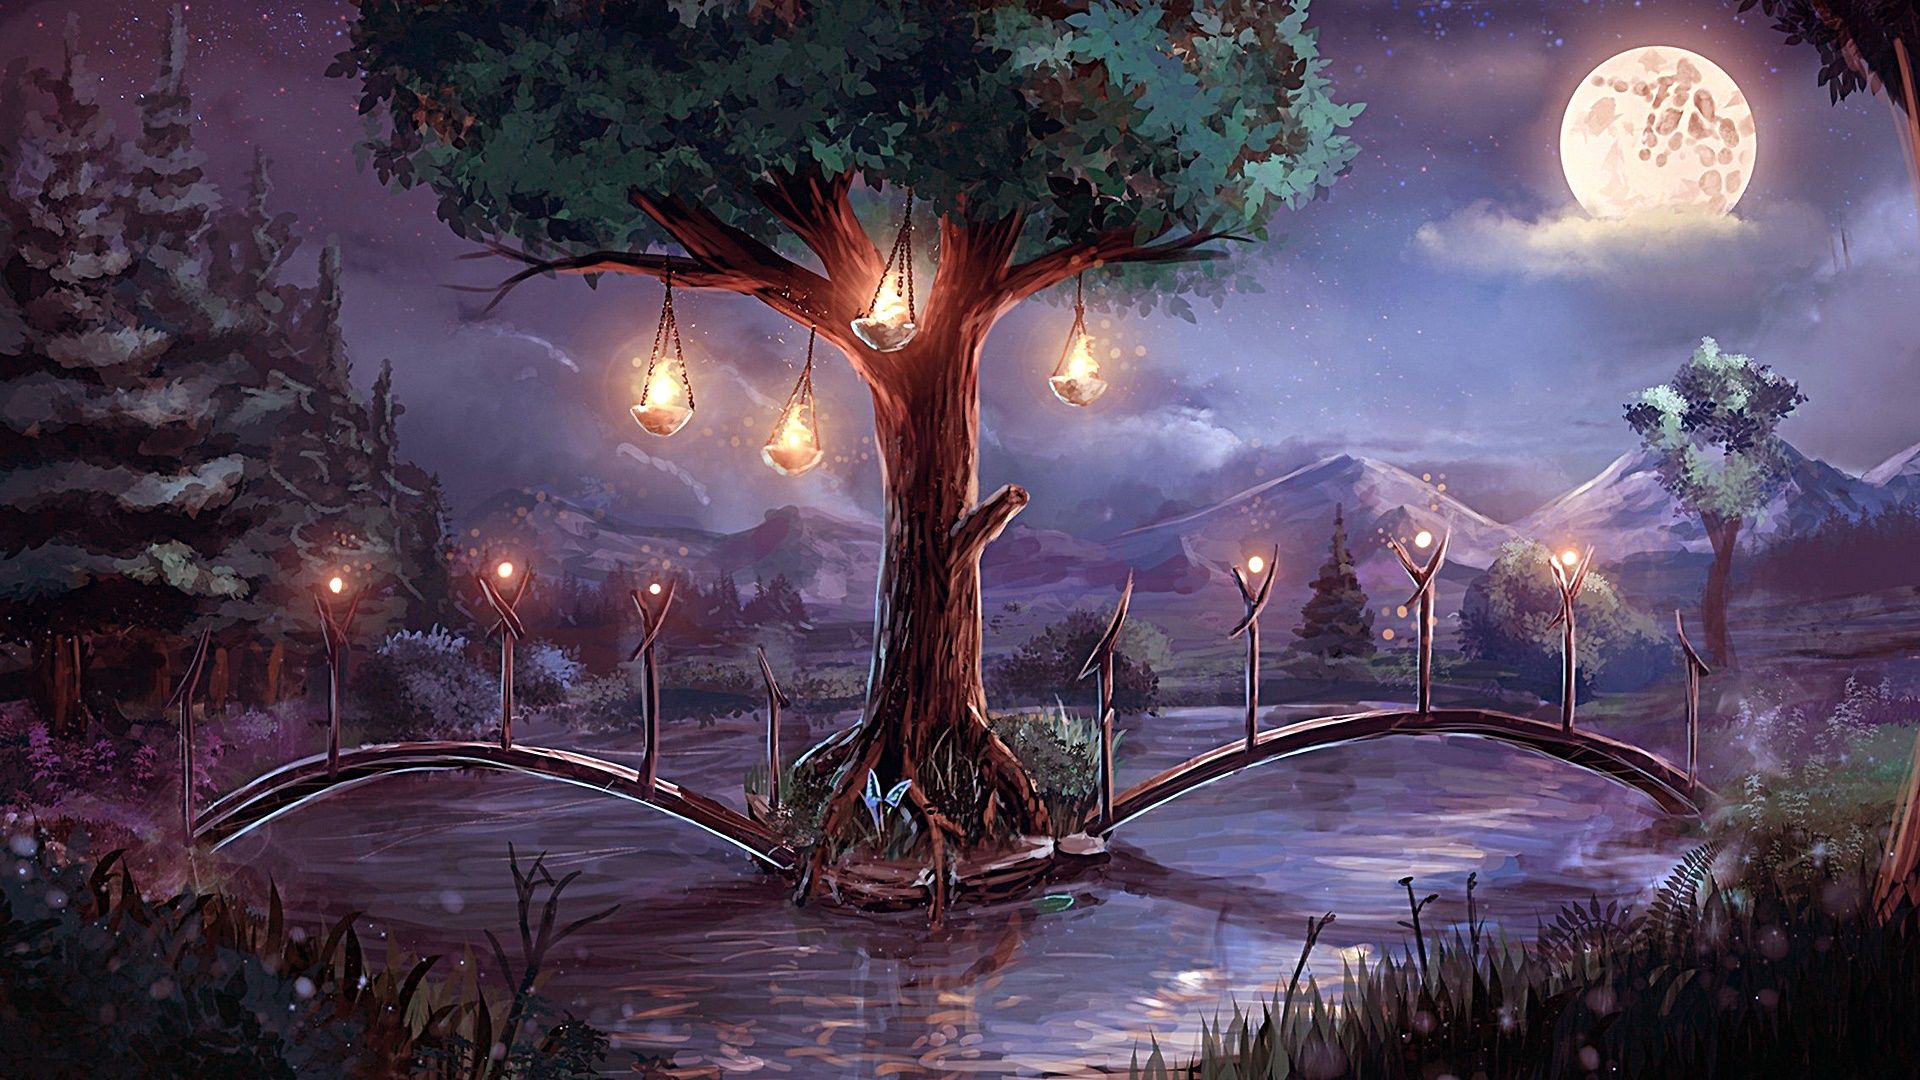 Full Moon over Fantasy landscape HD Wallpaper. Background Image